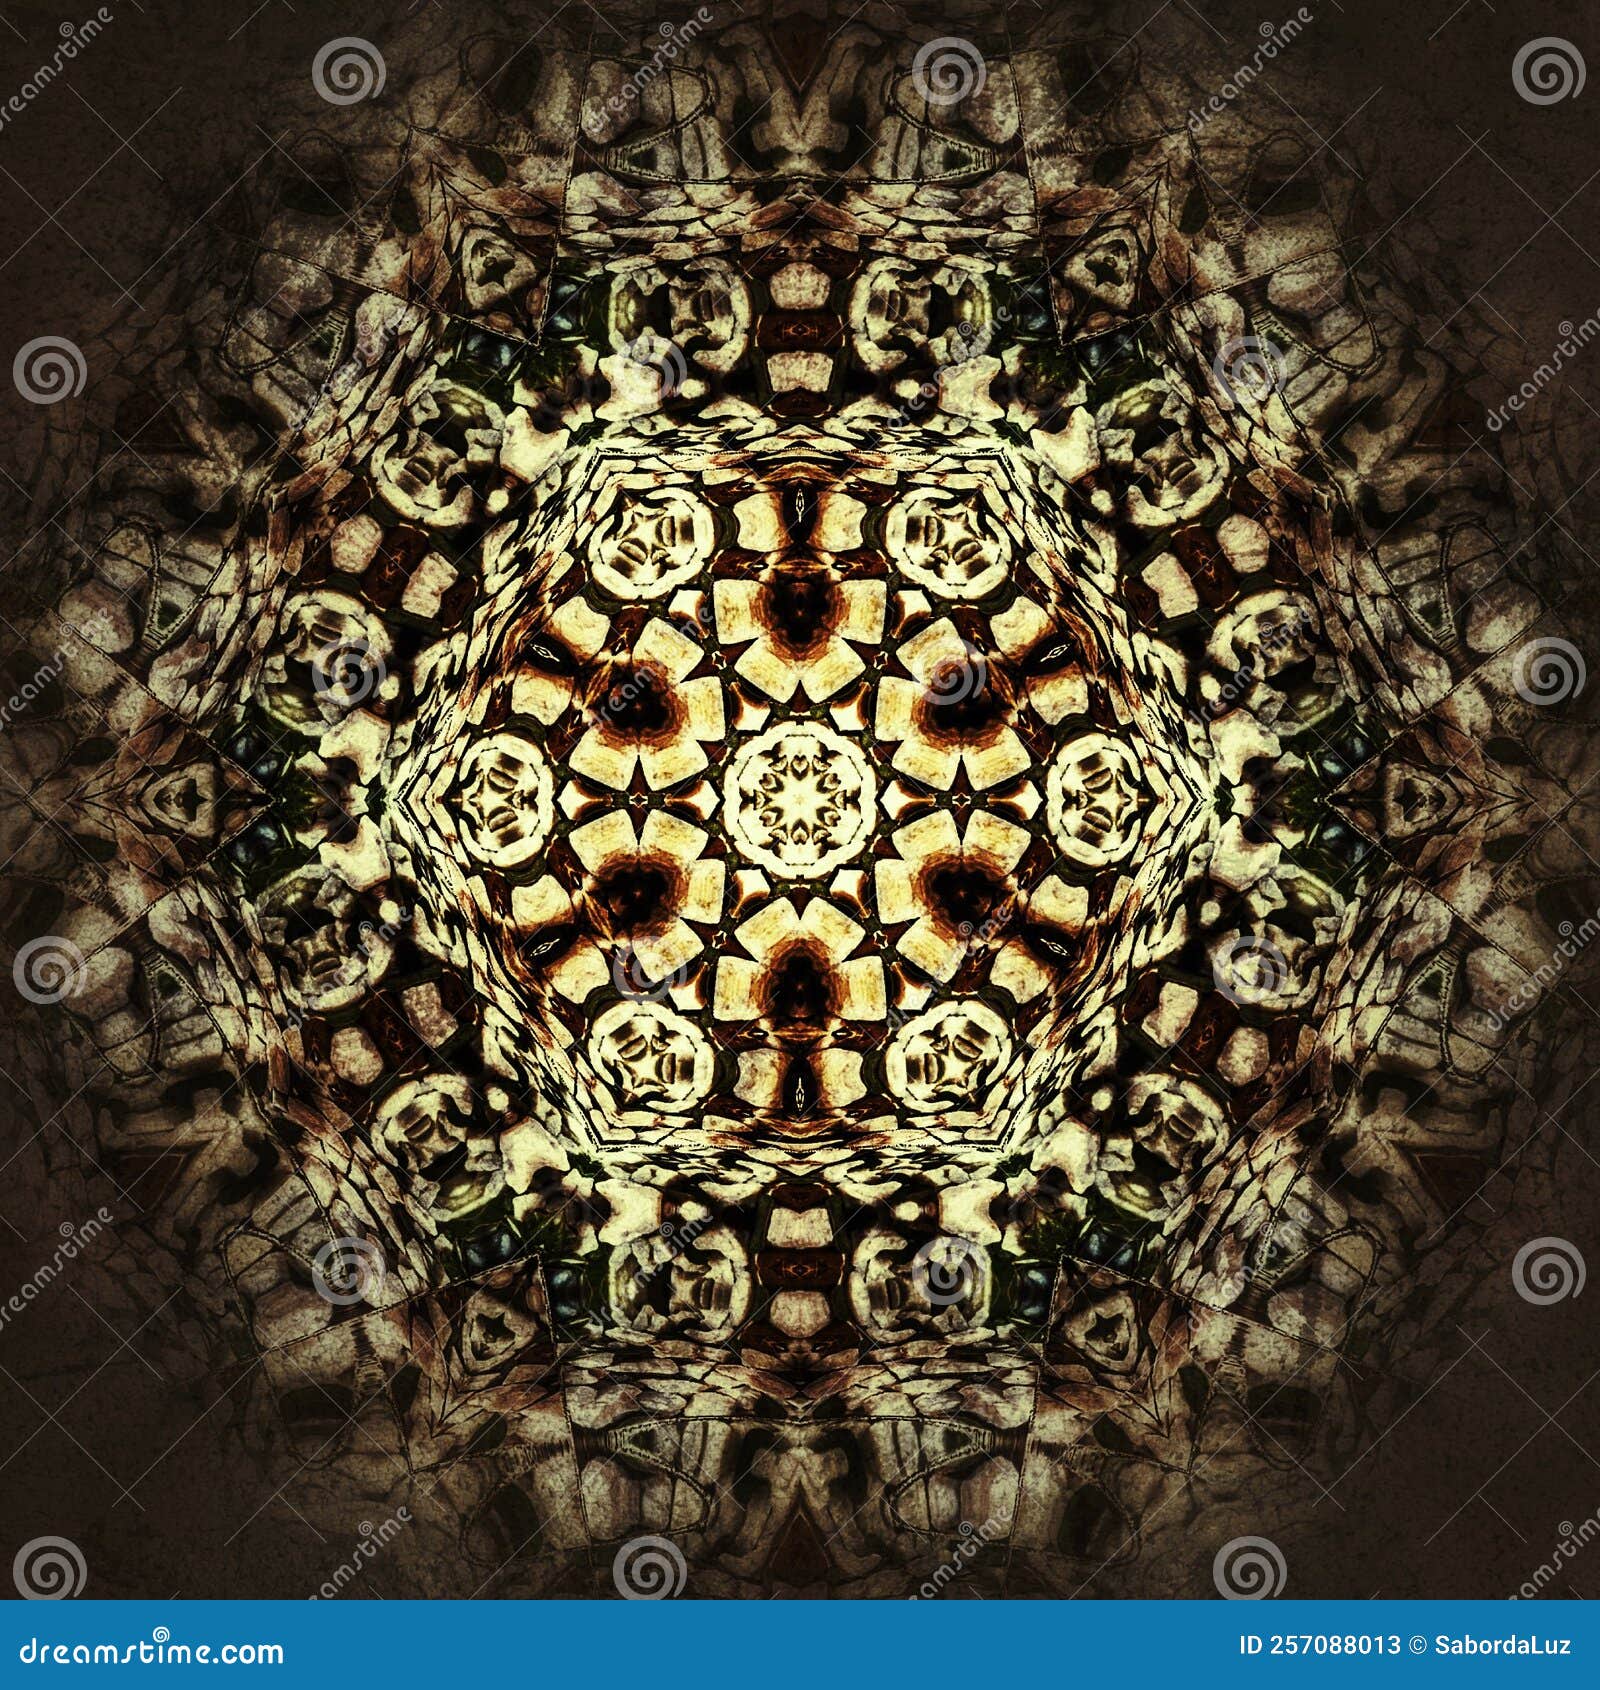 fractals kaleidoscope background texture for presentations